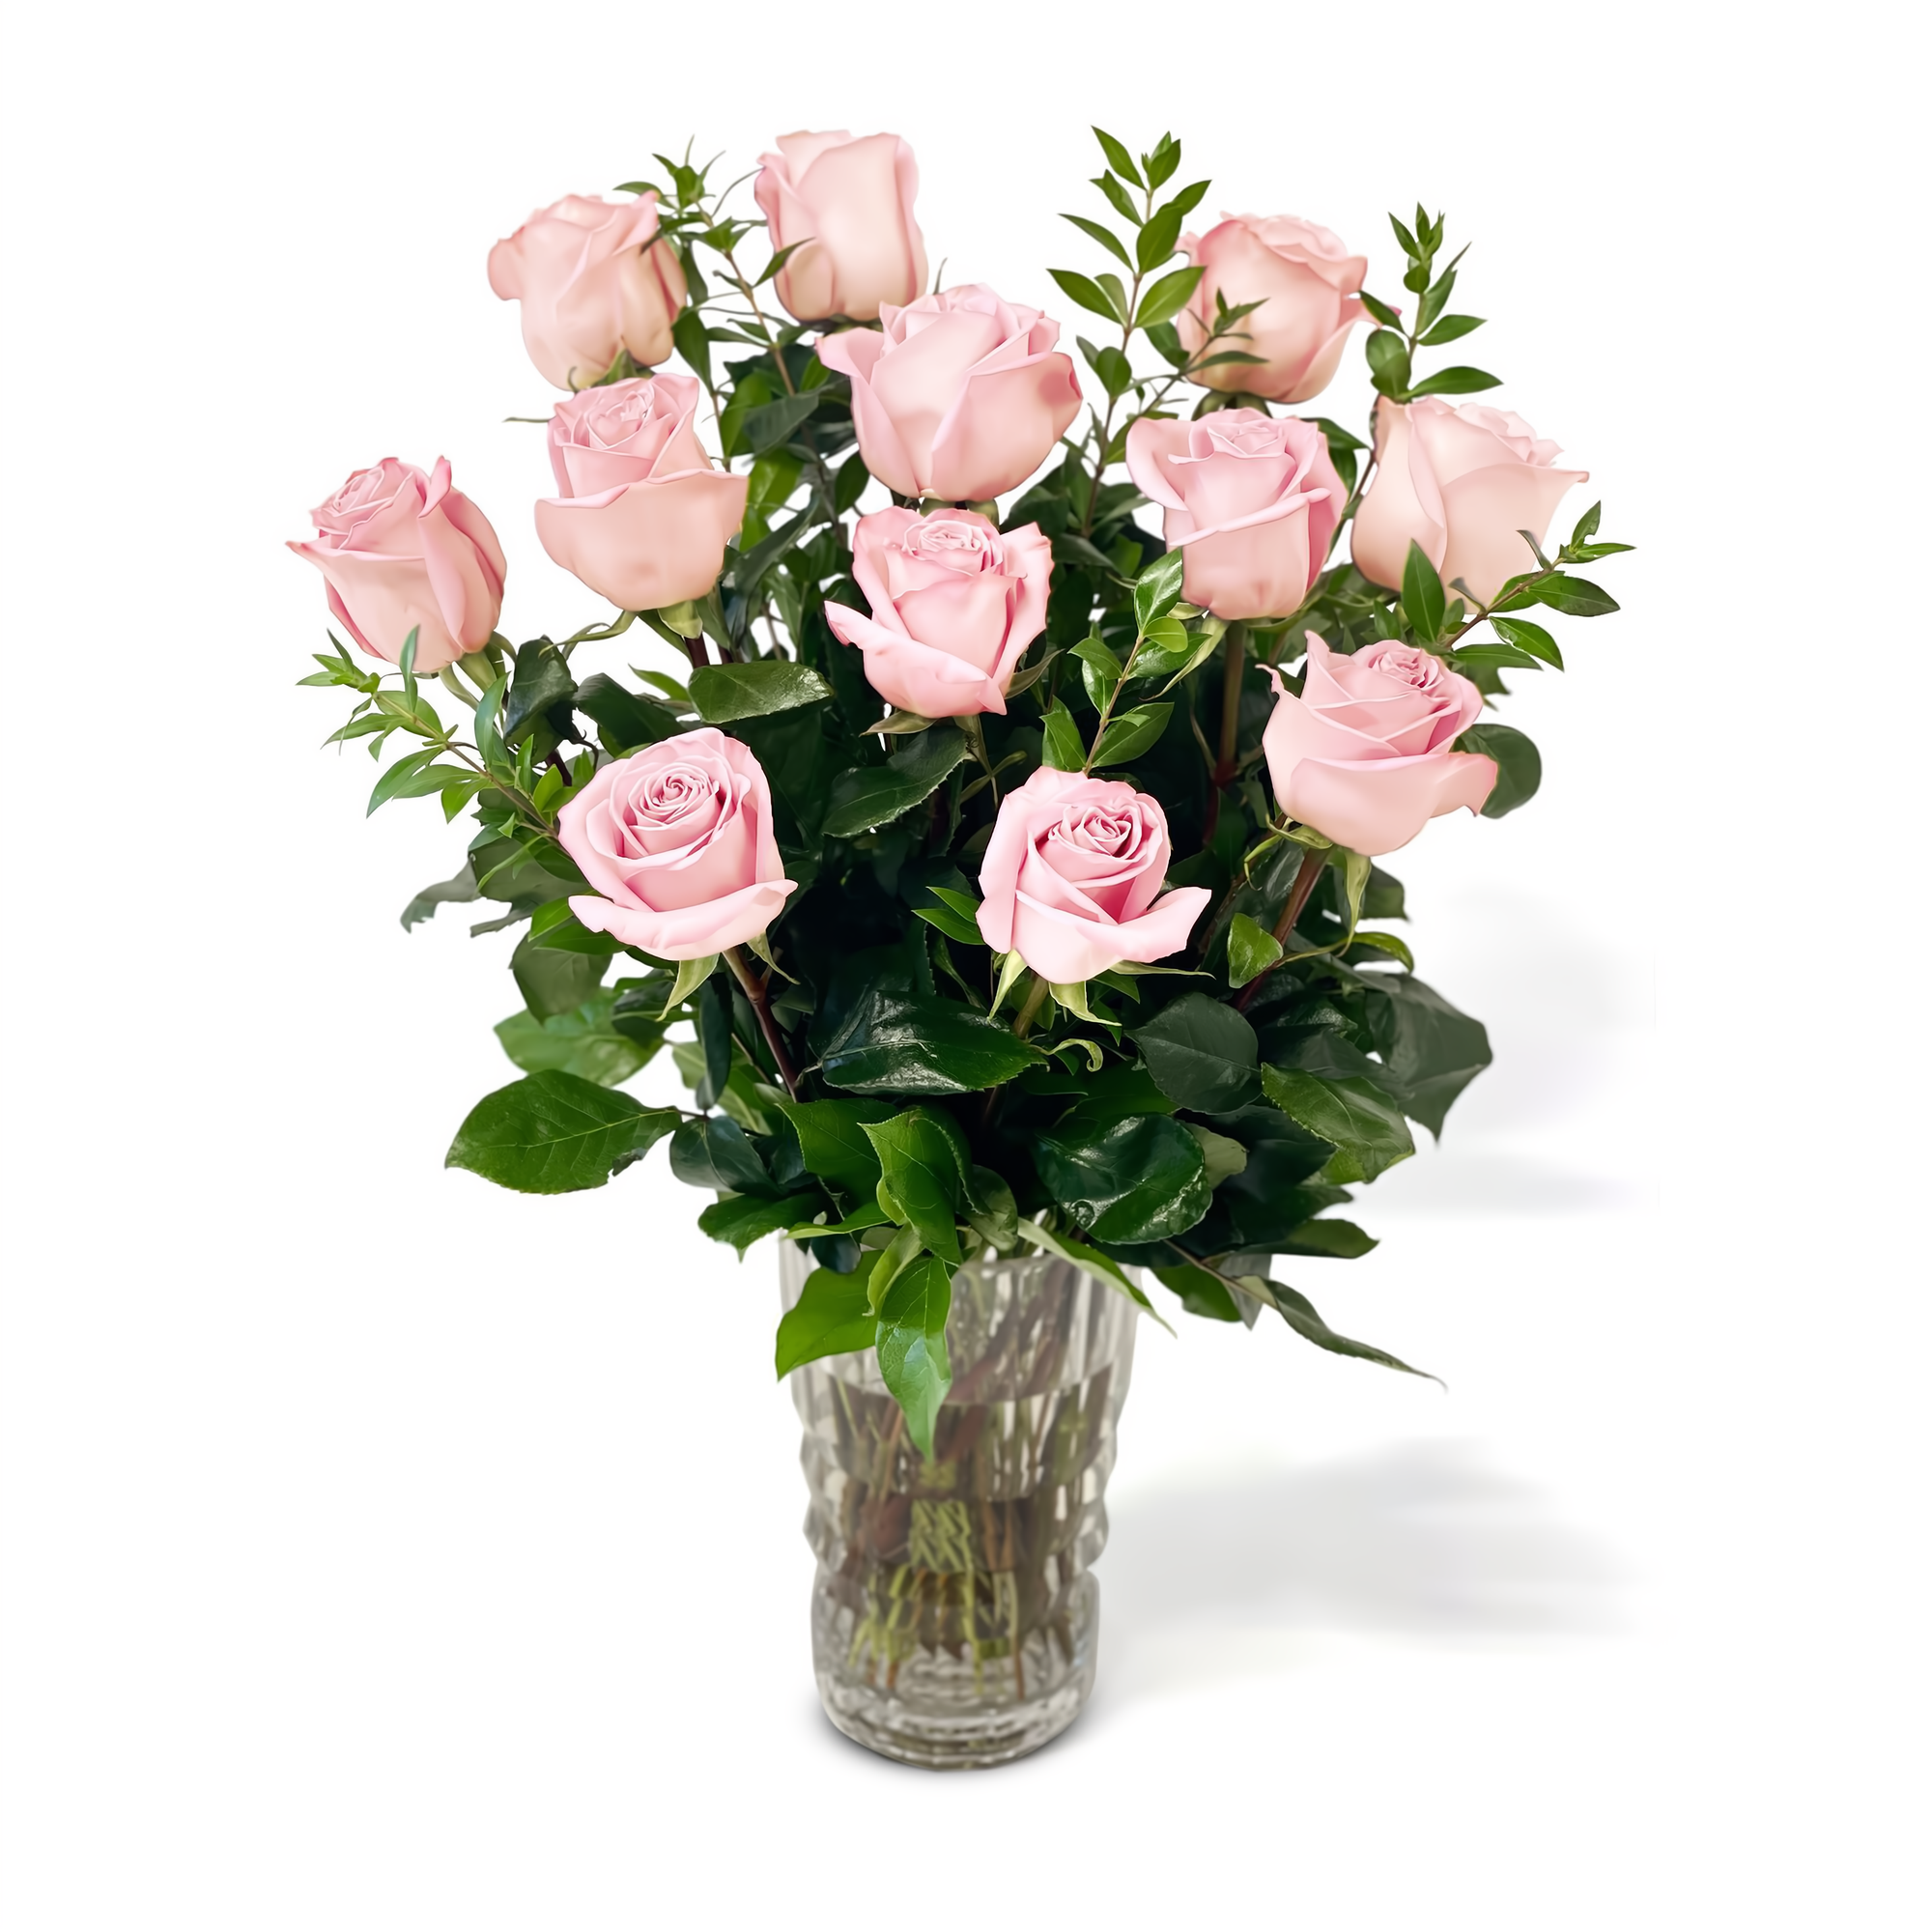 NYC Flower Delivery - Fresh Roses in a Crystal Vase | Dozen Light Pink - Roses